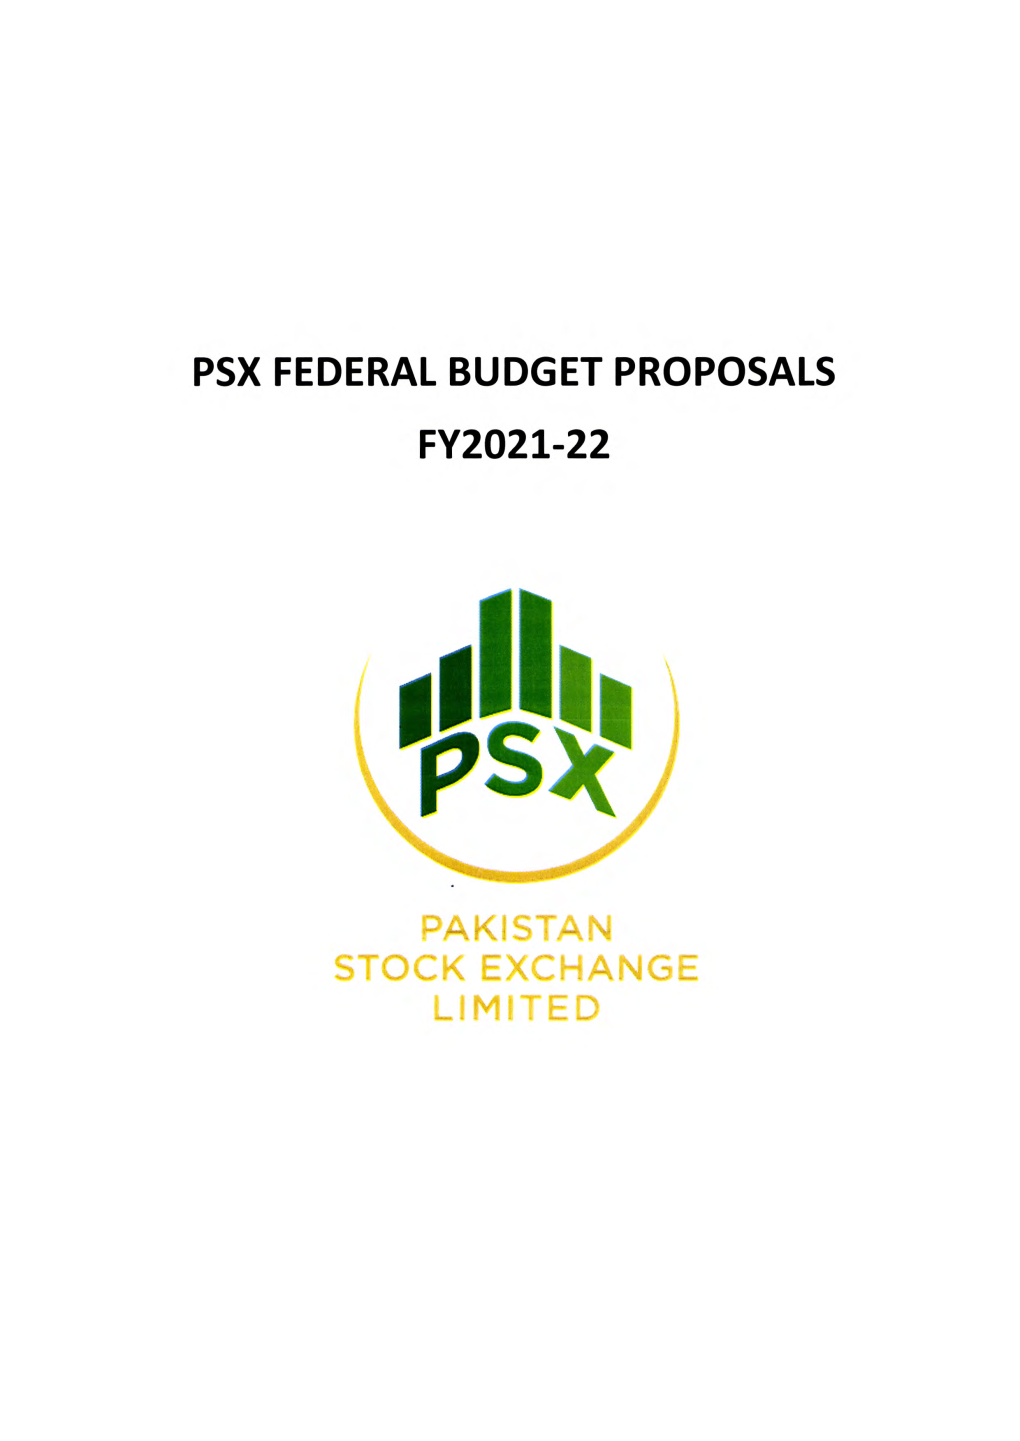 Psx Federal Budget Proposals Fy2021-22 Pakistan